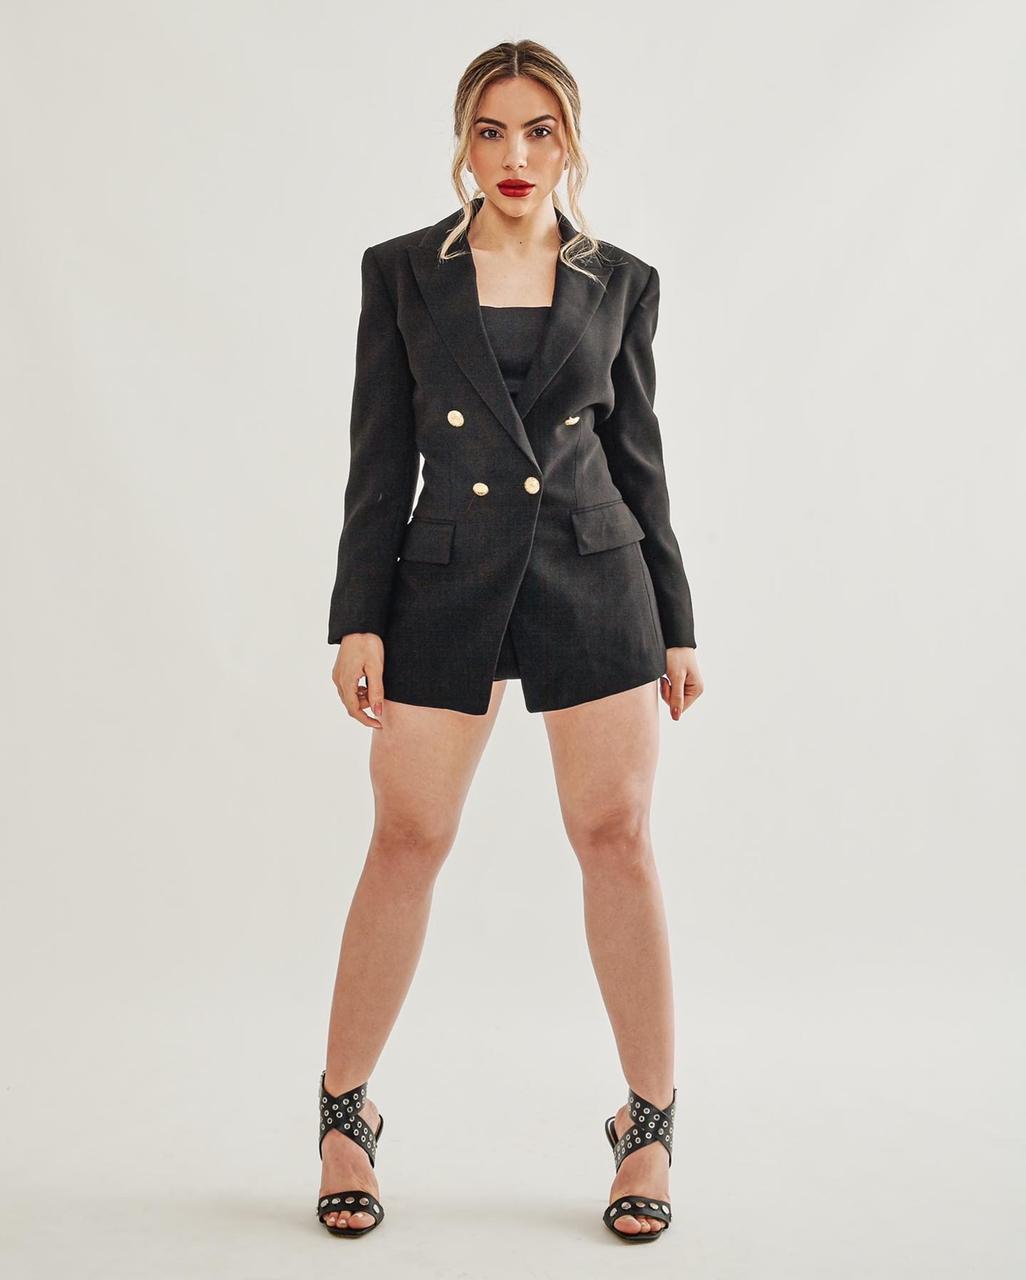 Mari standing in a black blazer top/dress 